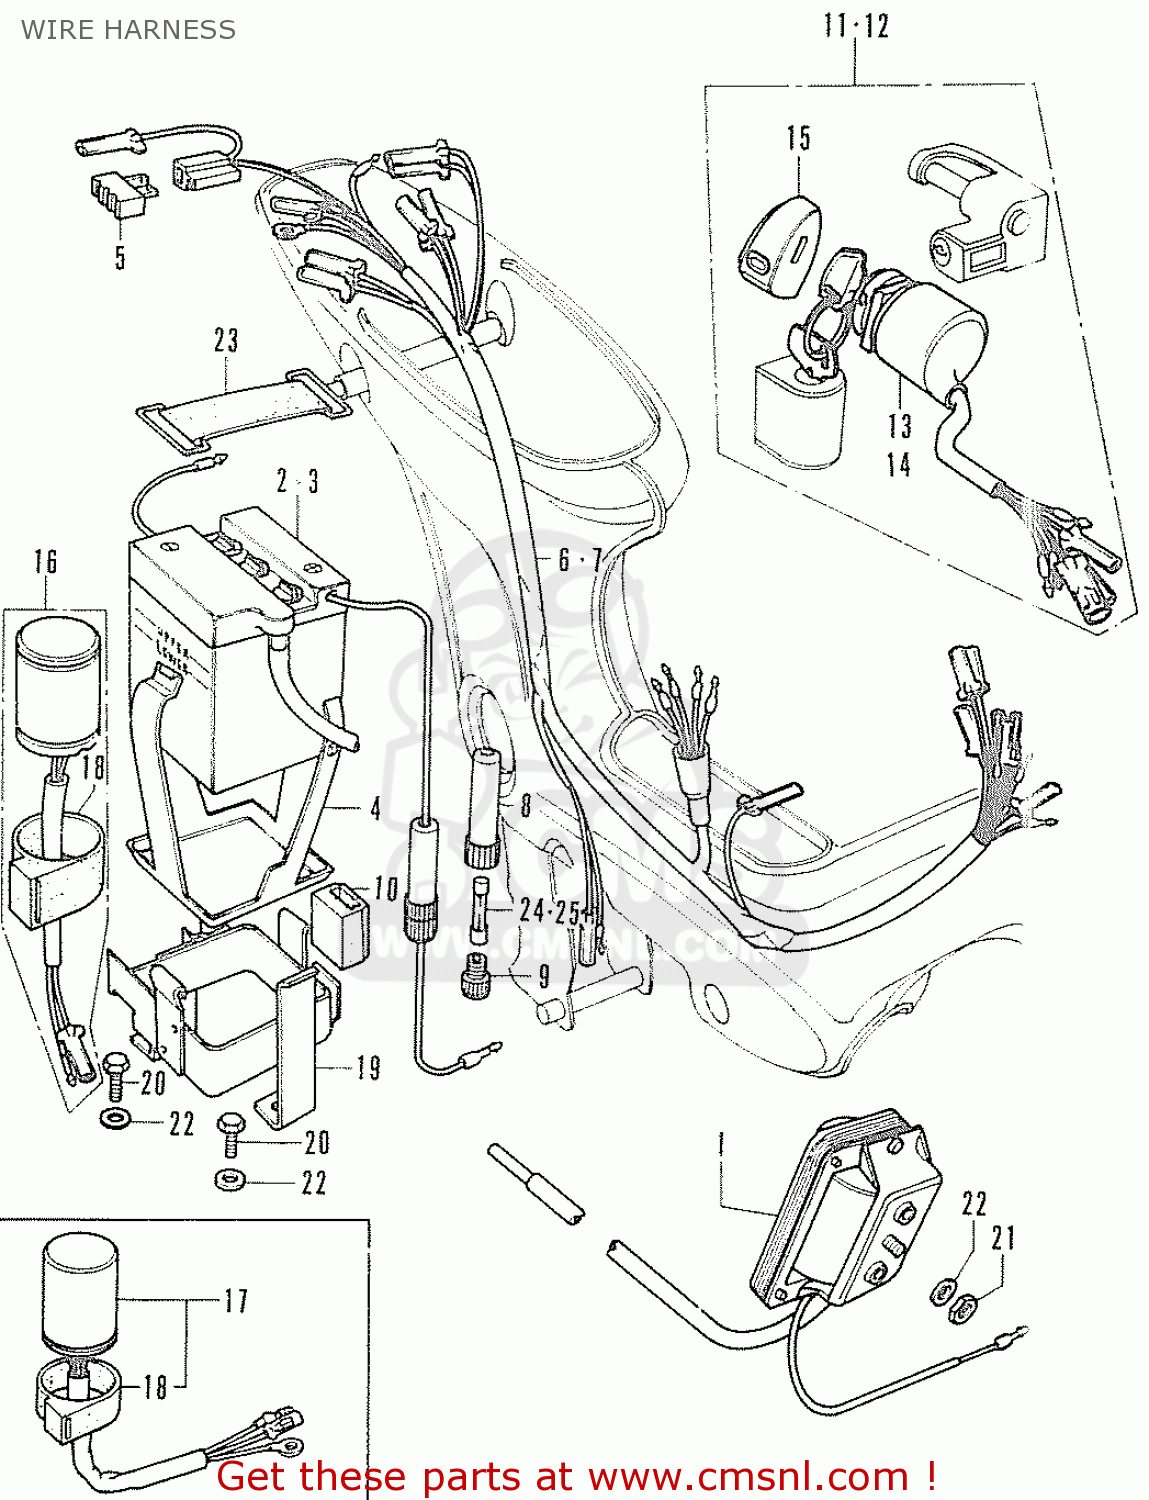 Honda chaly parts cyprus #4